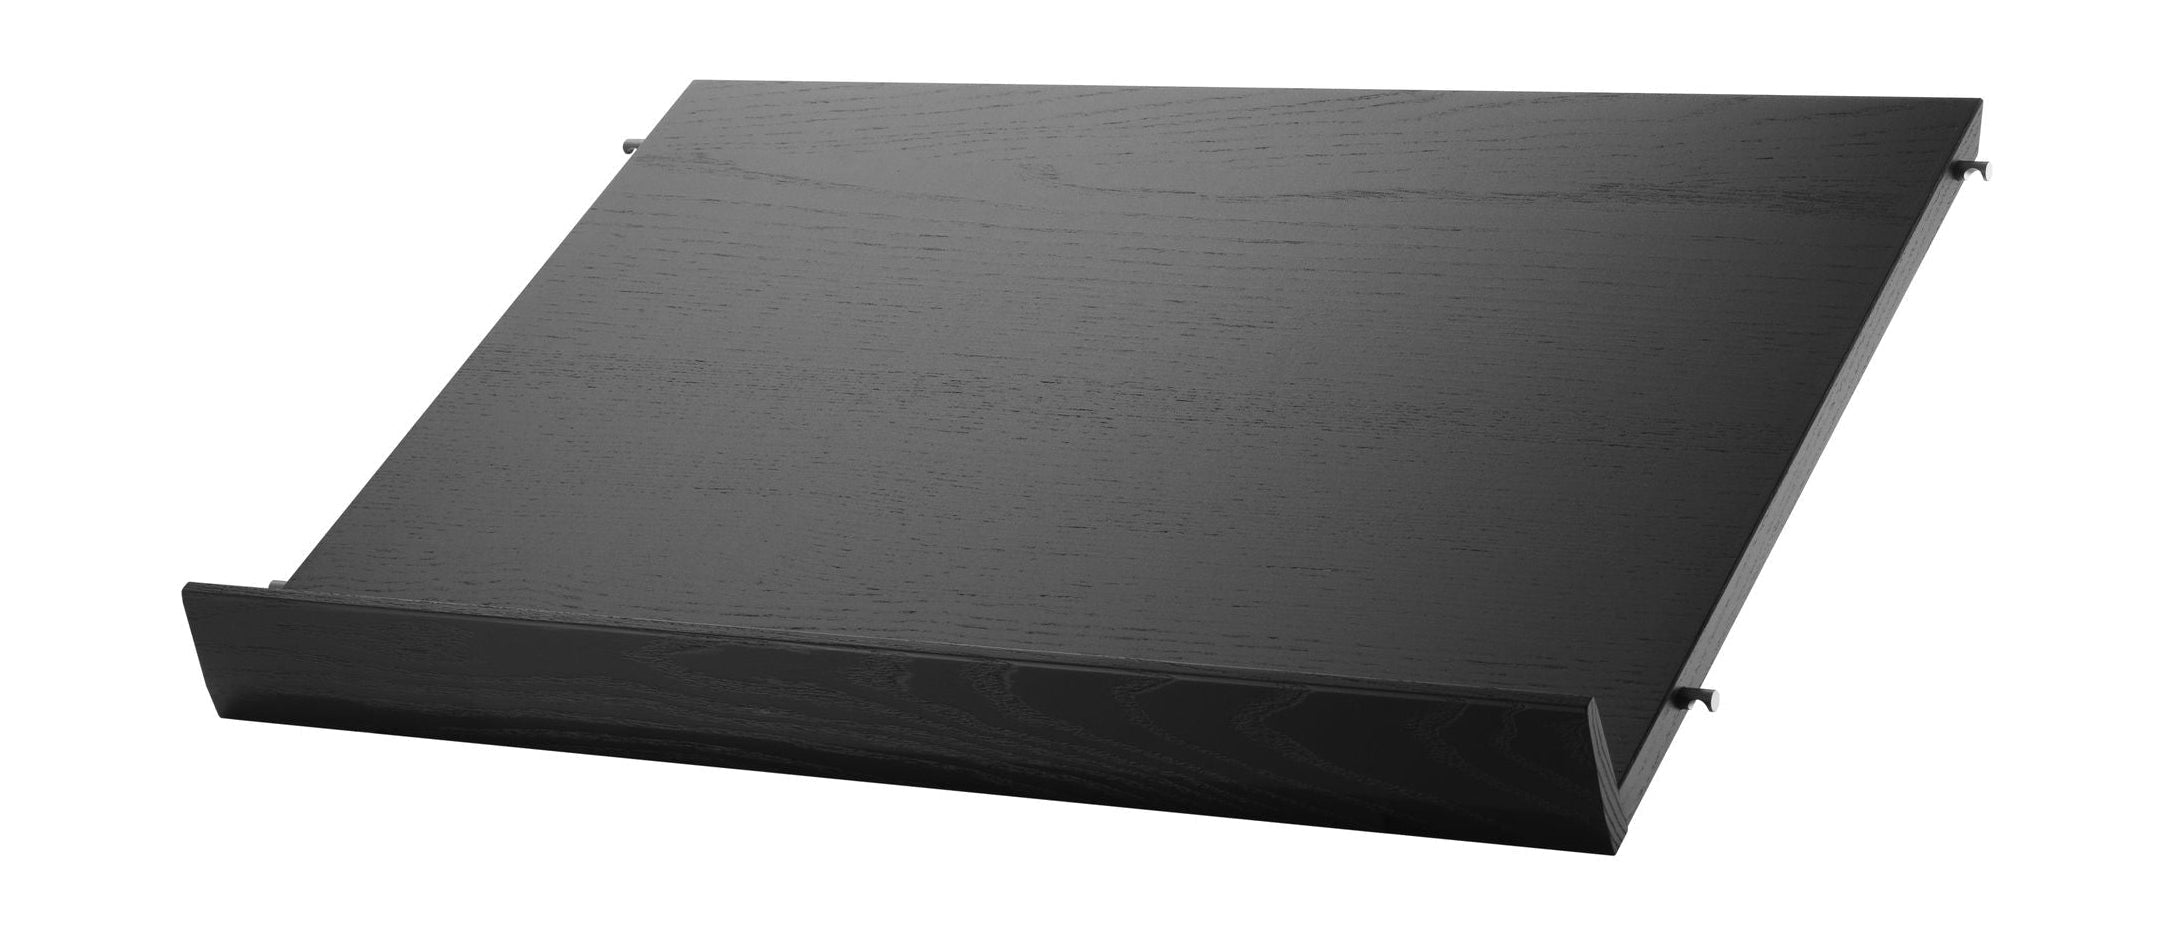 String Furniture String System Magazine Tray Wood Black Slainge Ash, 30x58 cm